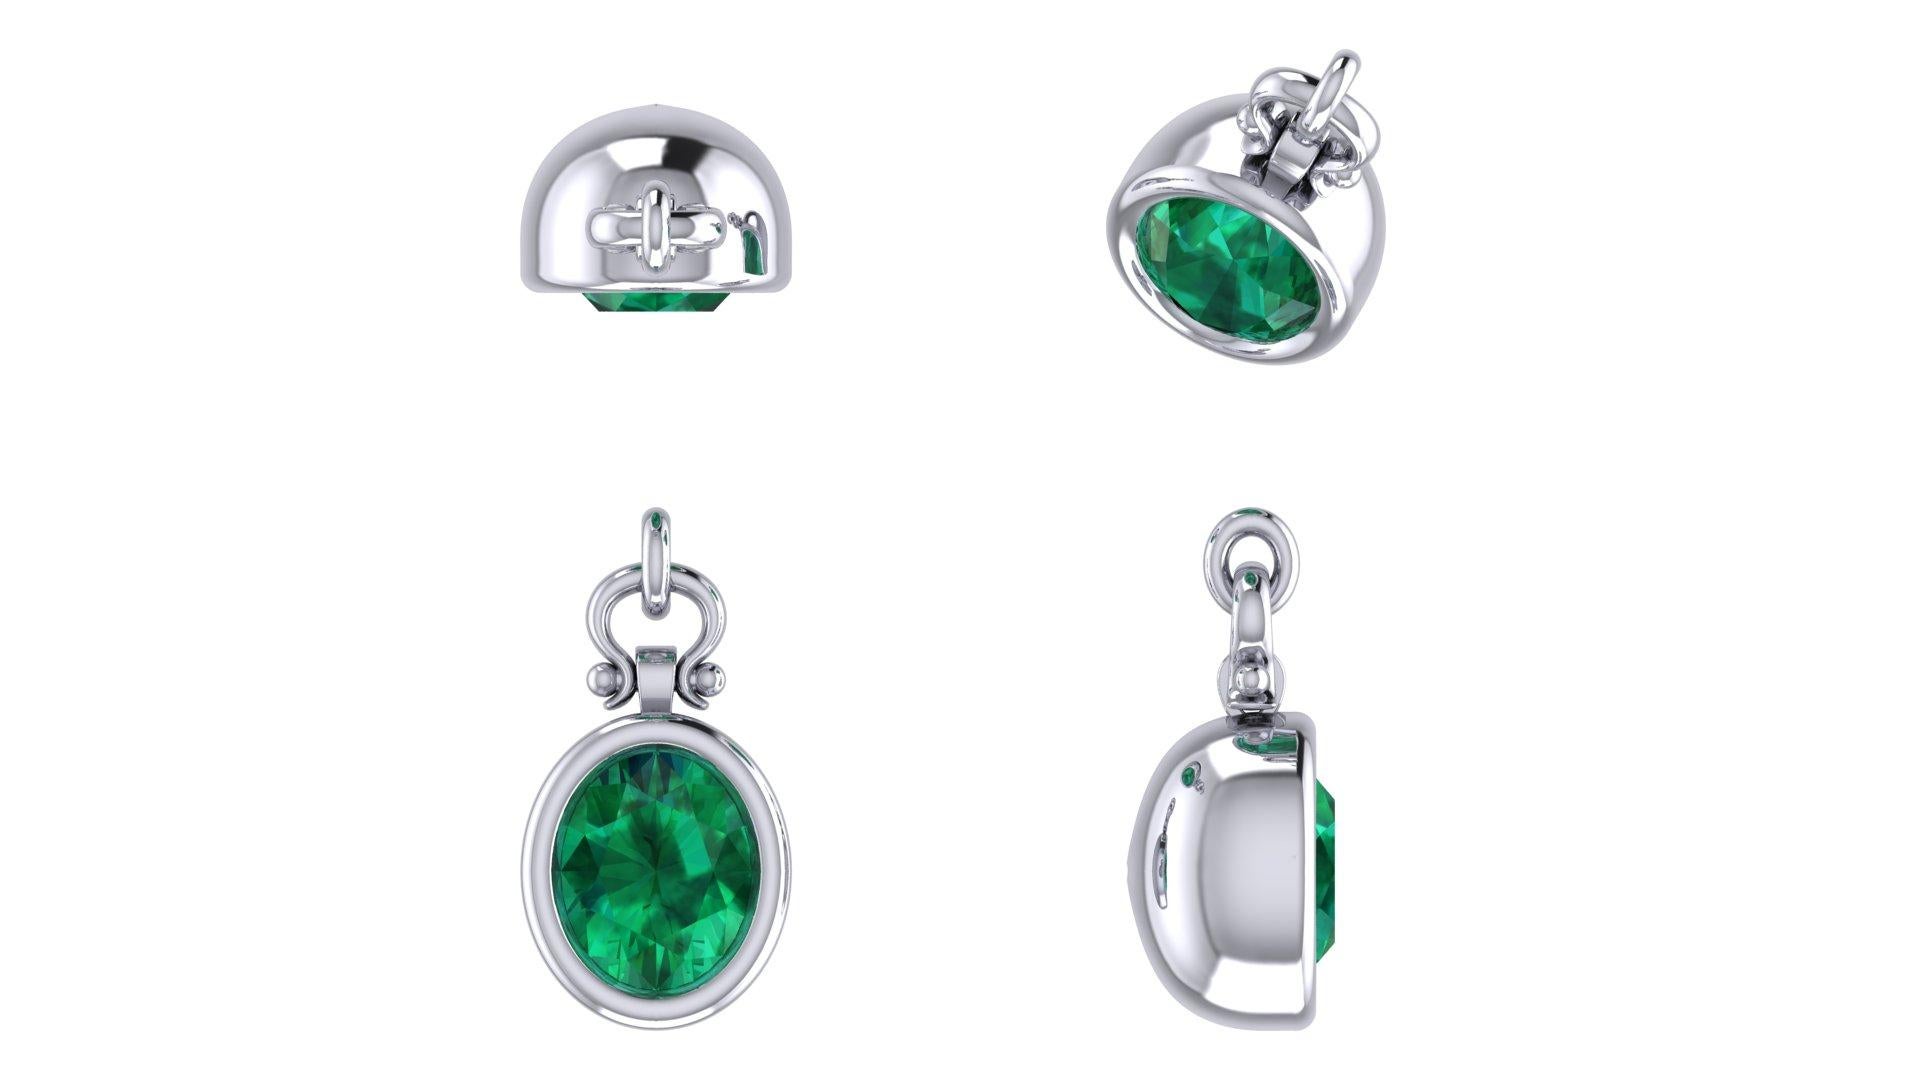 IGITL Certified 2.38 Carat Oval Cut Emerald Pendant Necklace in 18K For Sale 2